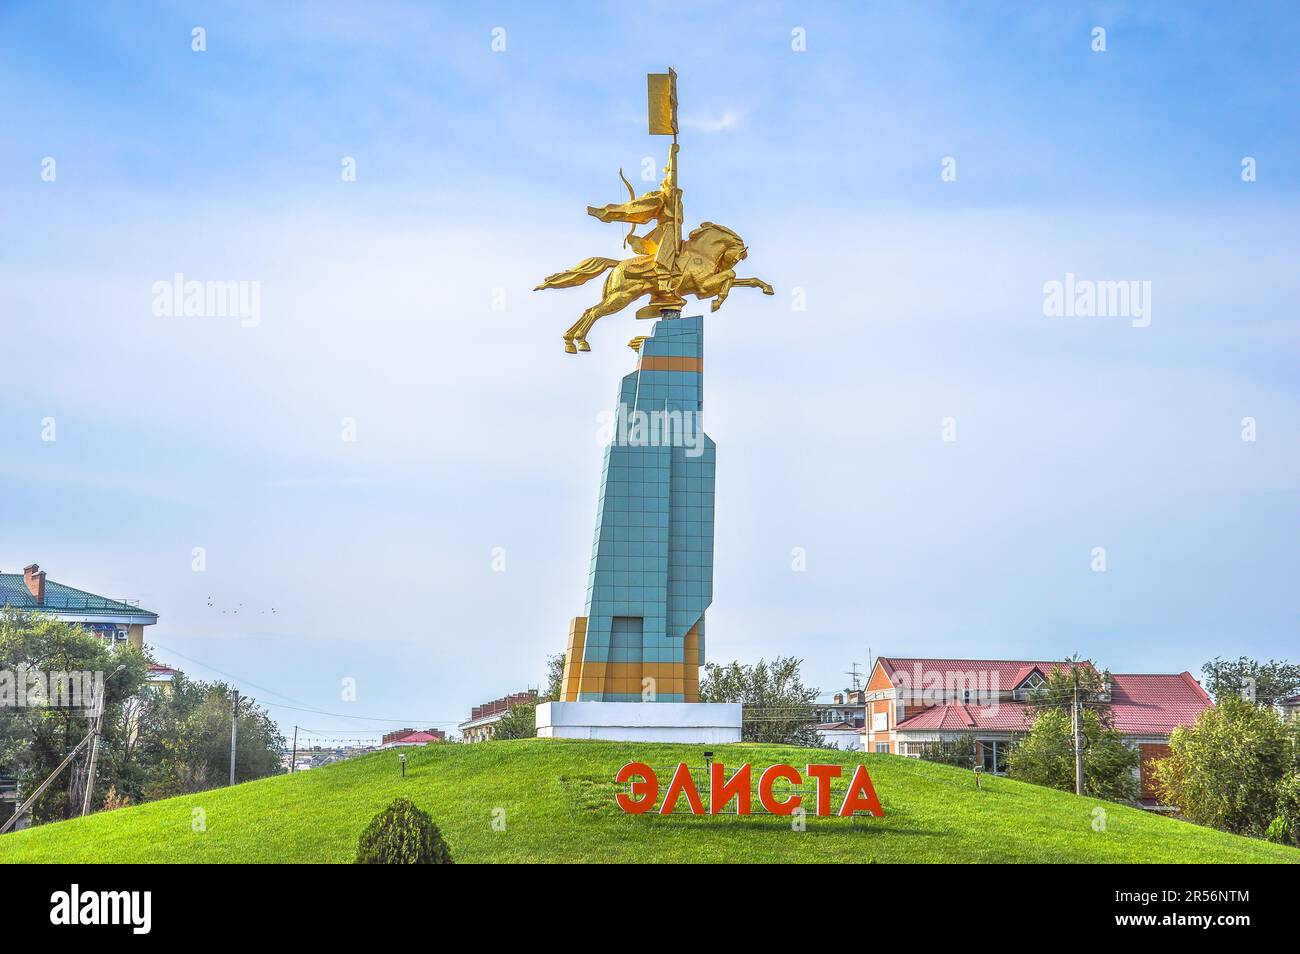 Elista, Kalmykia Republic, Russia - 08.29.2021: Monument of the Golden Horseman. The inscription indicates 'Elista'. Stock Photo